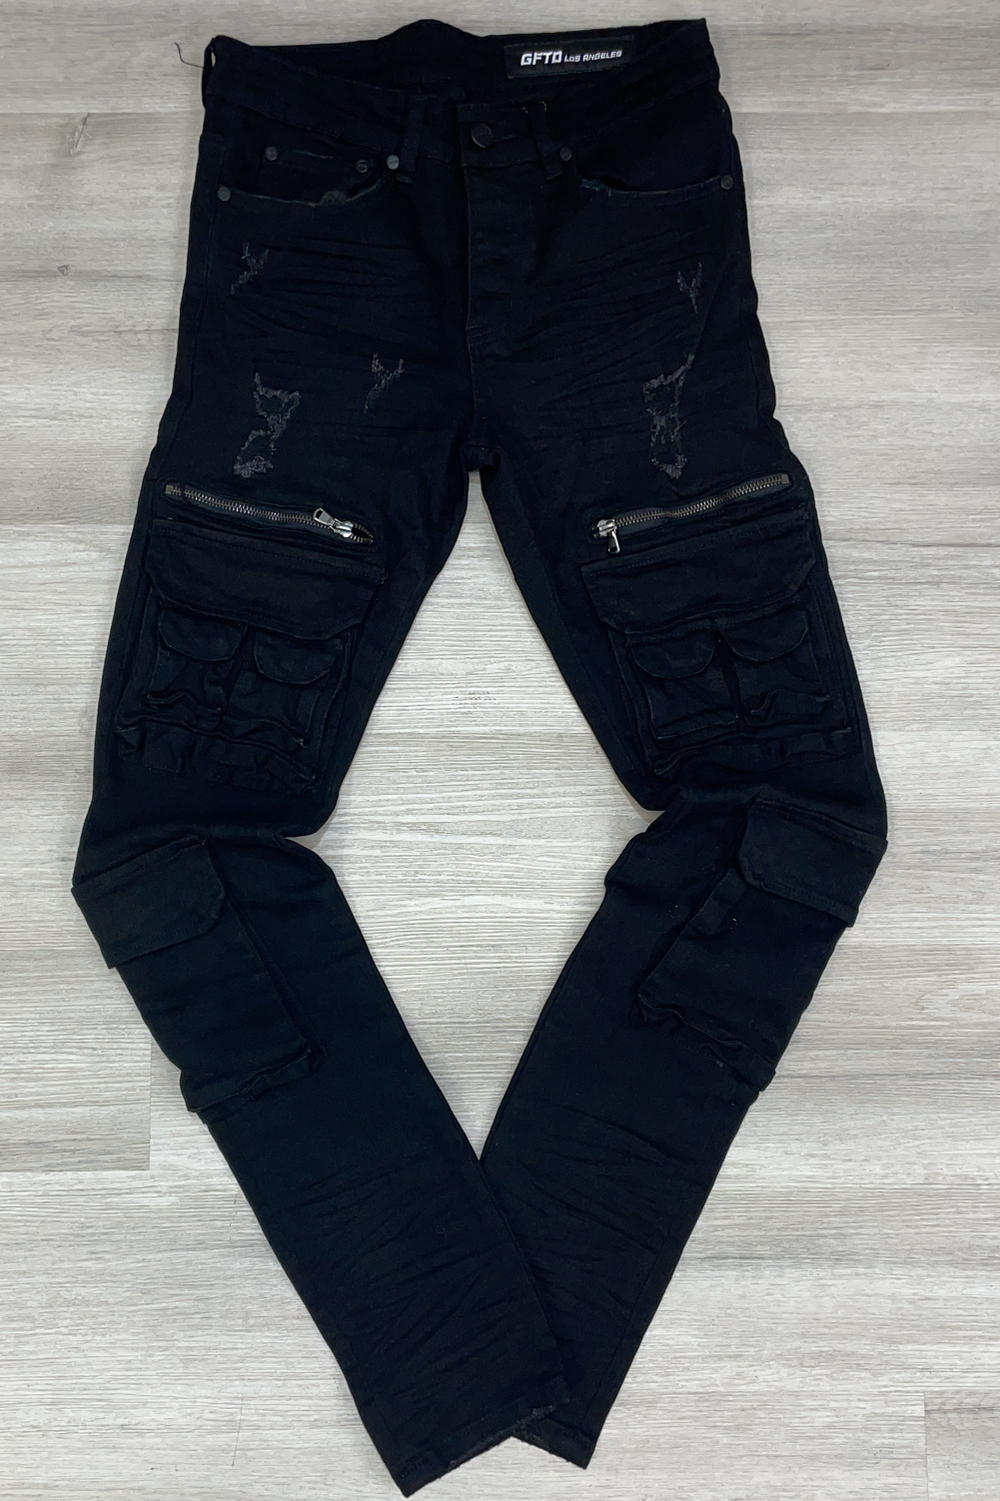 GFTD - tray jeans (black)